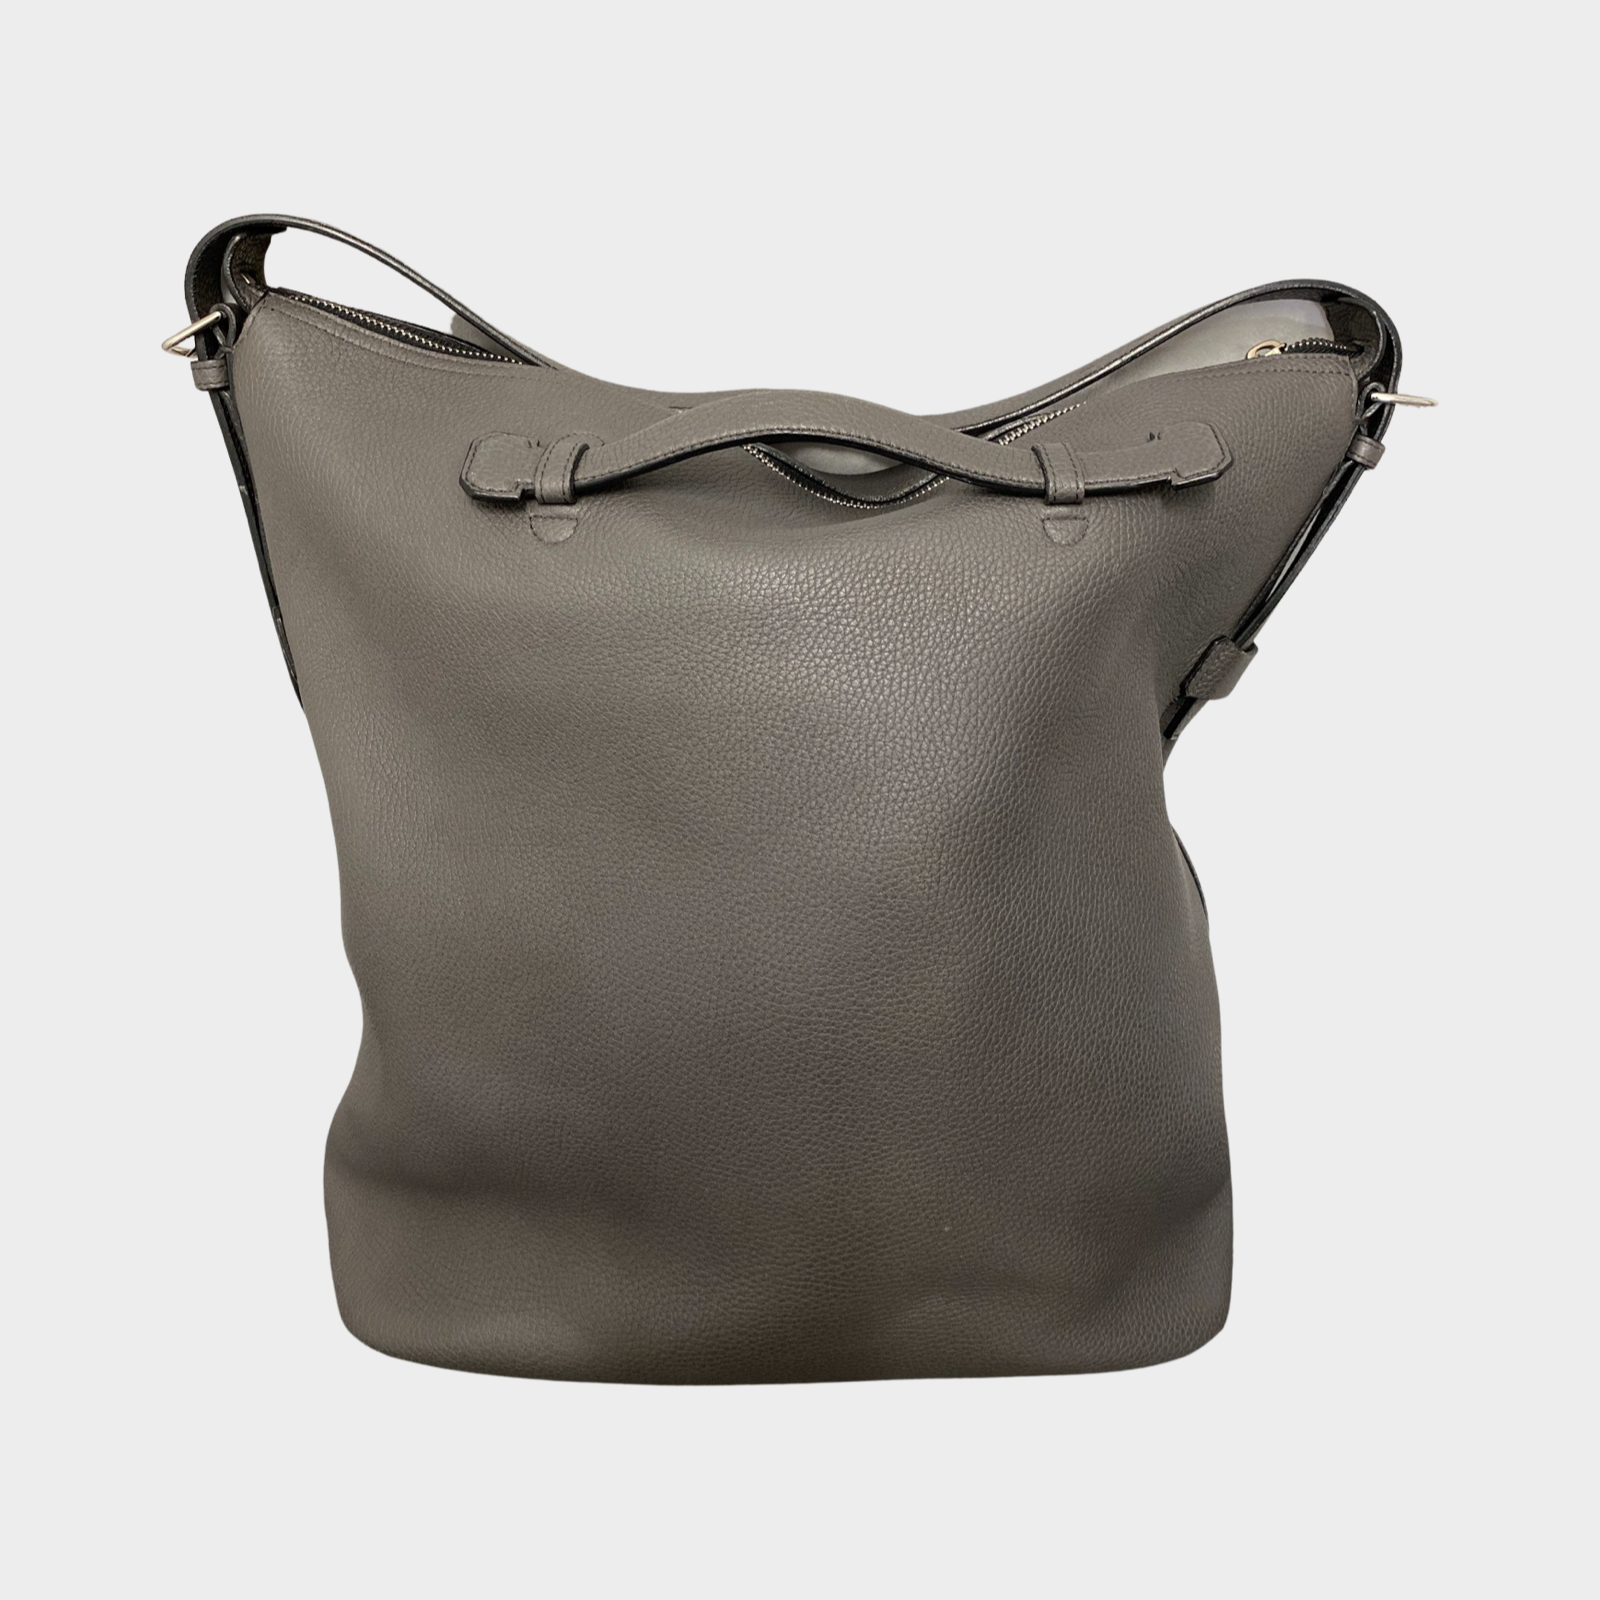 Shop Bally Vesper leather handbag on Rinascente